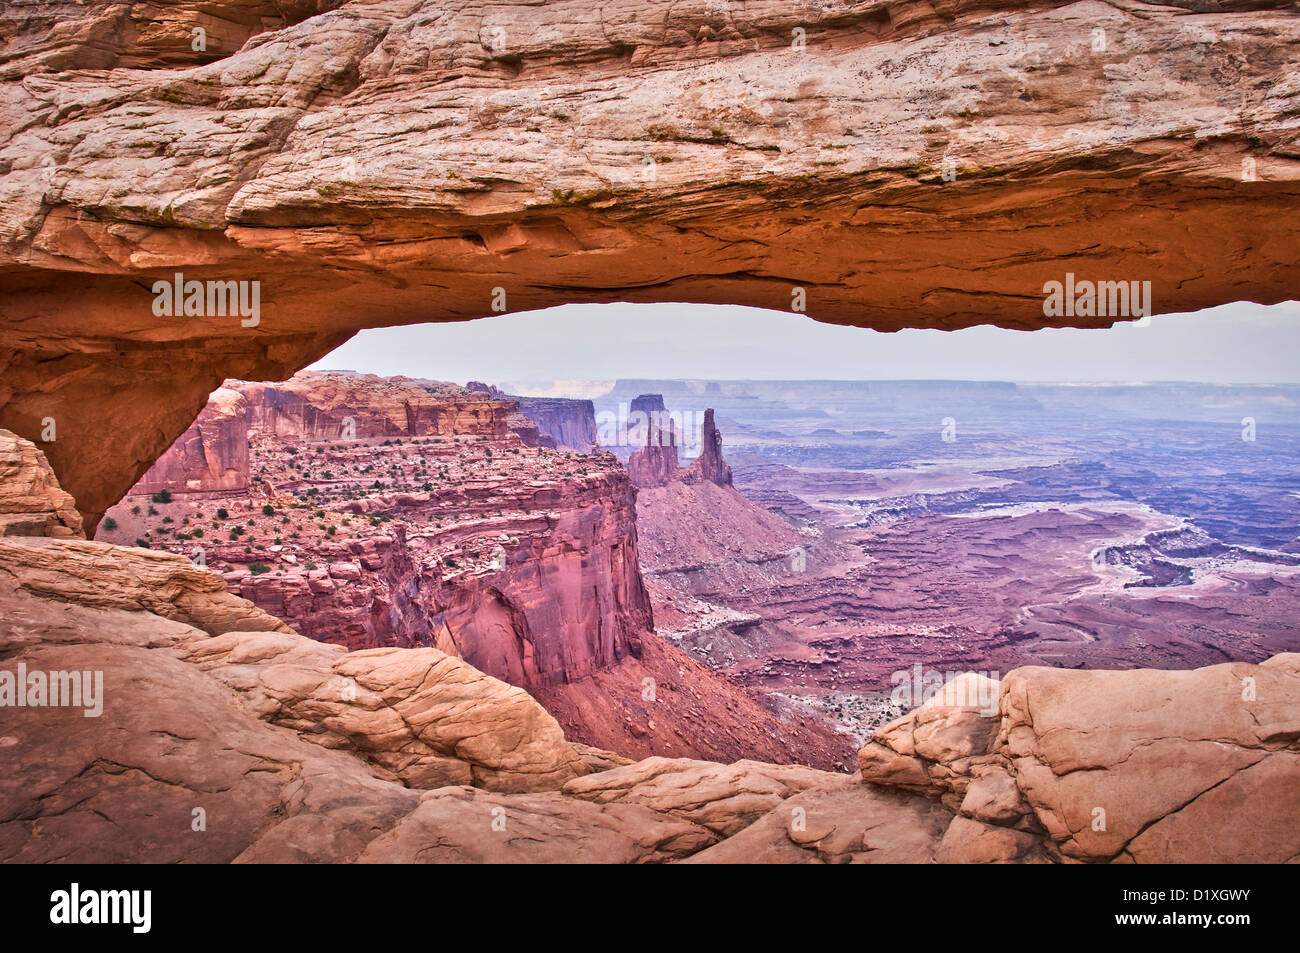 Mesa arch - Canyonlands national park, Utah, USA Stock Photo